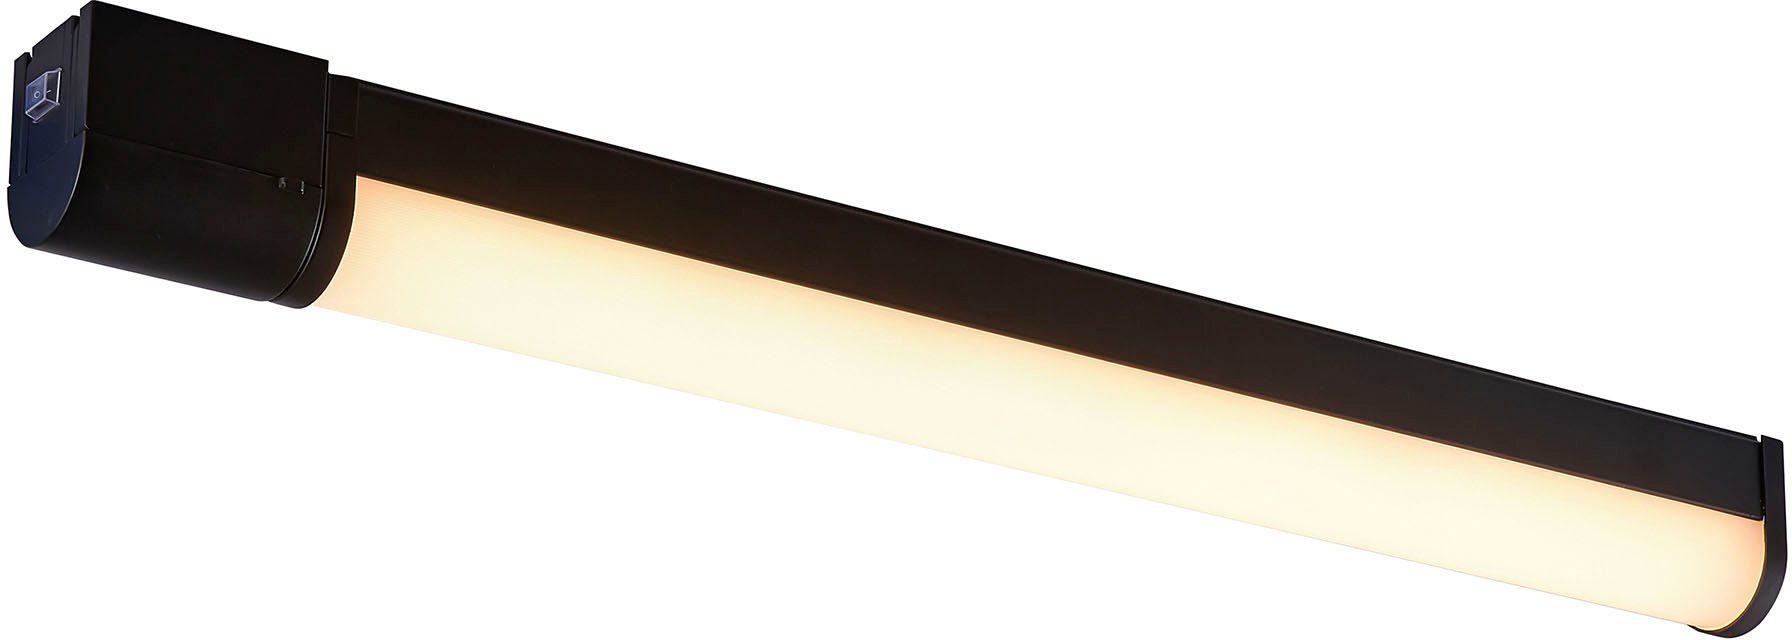 Nordlux LED Unterbauleuchte Malaika 68, LED fest integriert, Warmweiß,  20.000h Lebensdauer + 5 Jahre LED Garantie